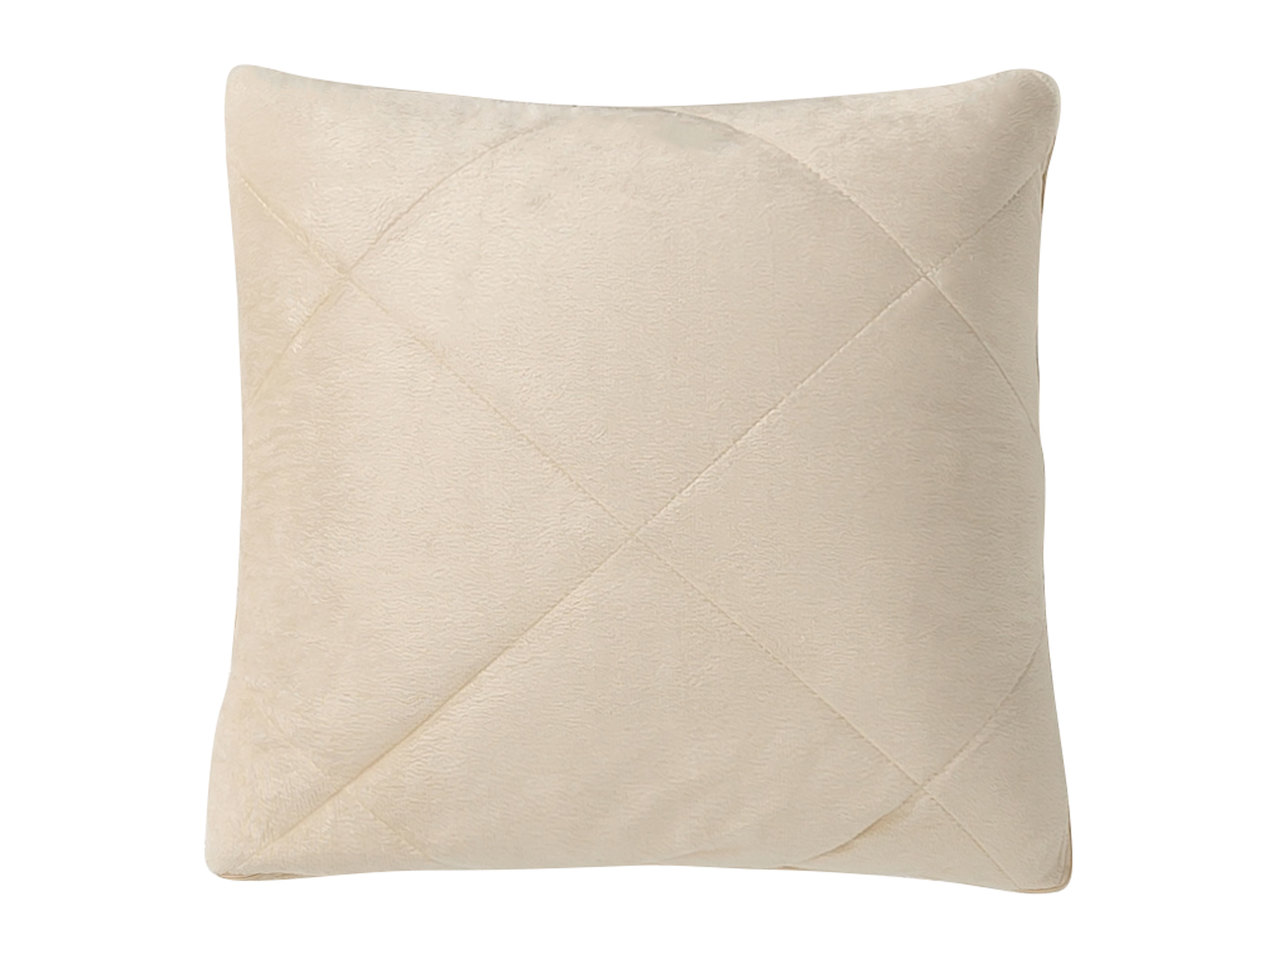 Meradiso 2-in-1 Cushion and Blanket1